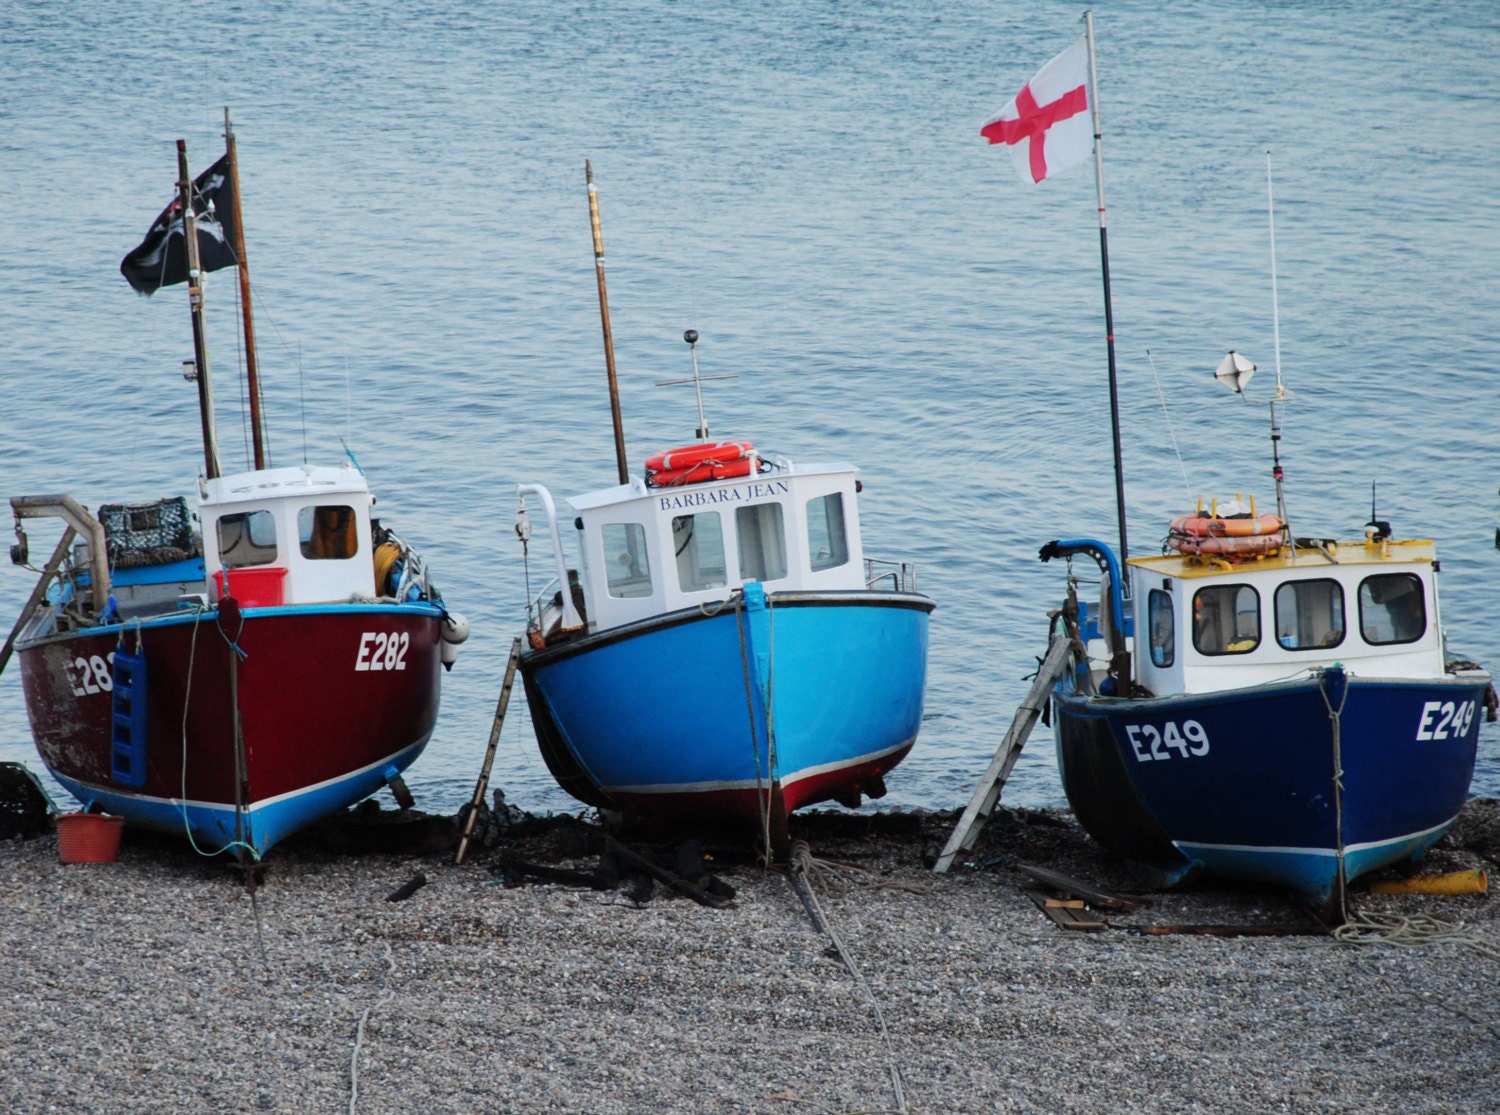 Three Little Fishing Boats an A4 21cm X 29.7cm Photographic Print -   Canada